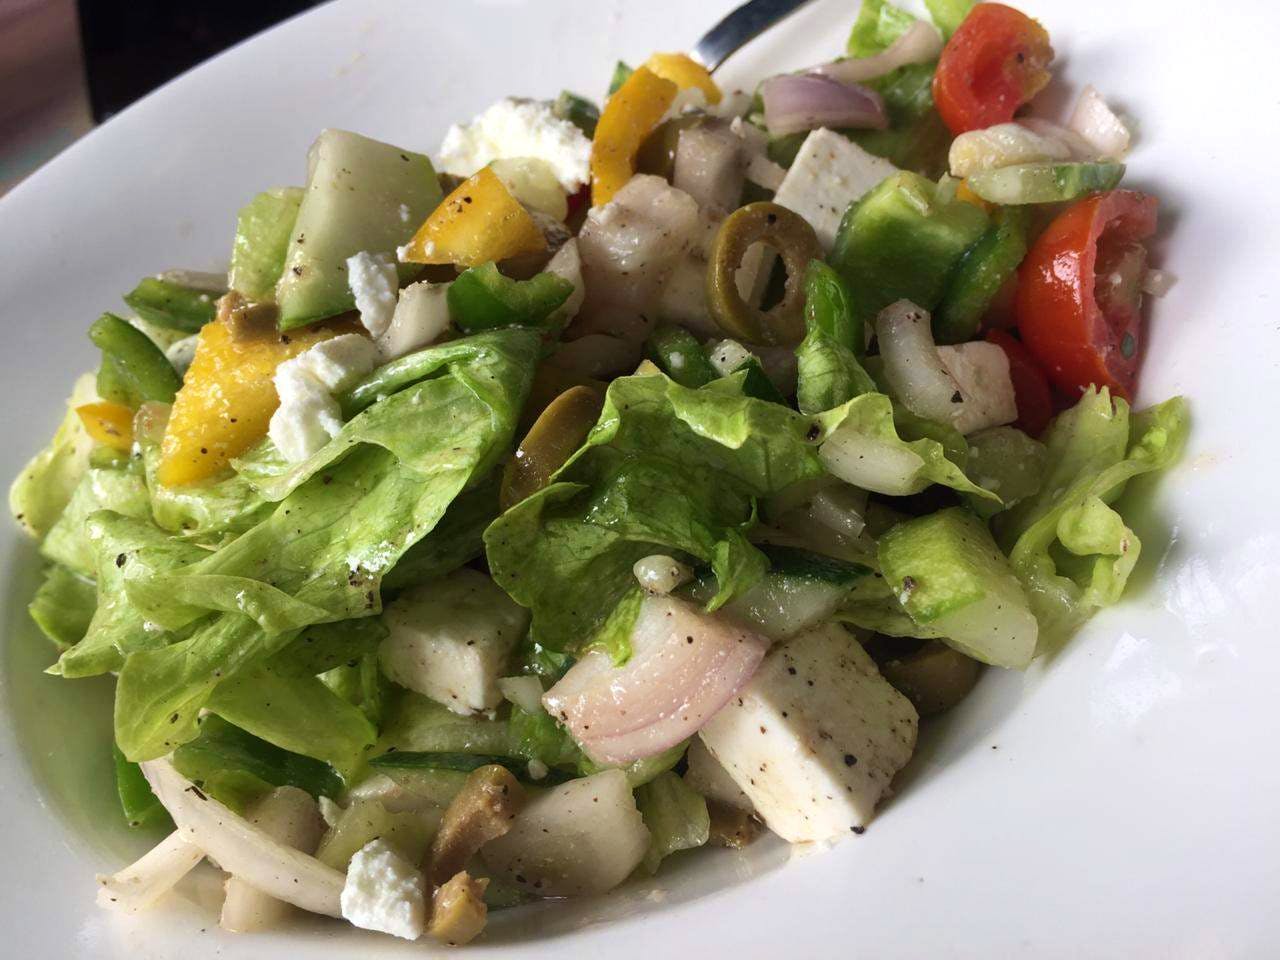 Dish,Food,Cuisine,Garden salad,Salad,Greek salad,Ingredient,Vegetable,Spinach salad,Caesar salad